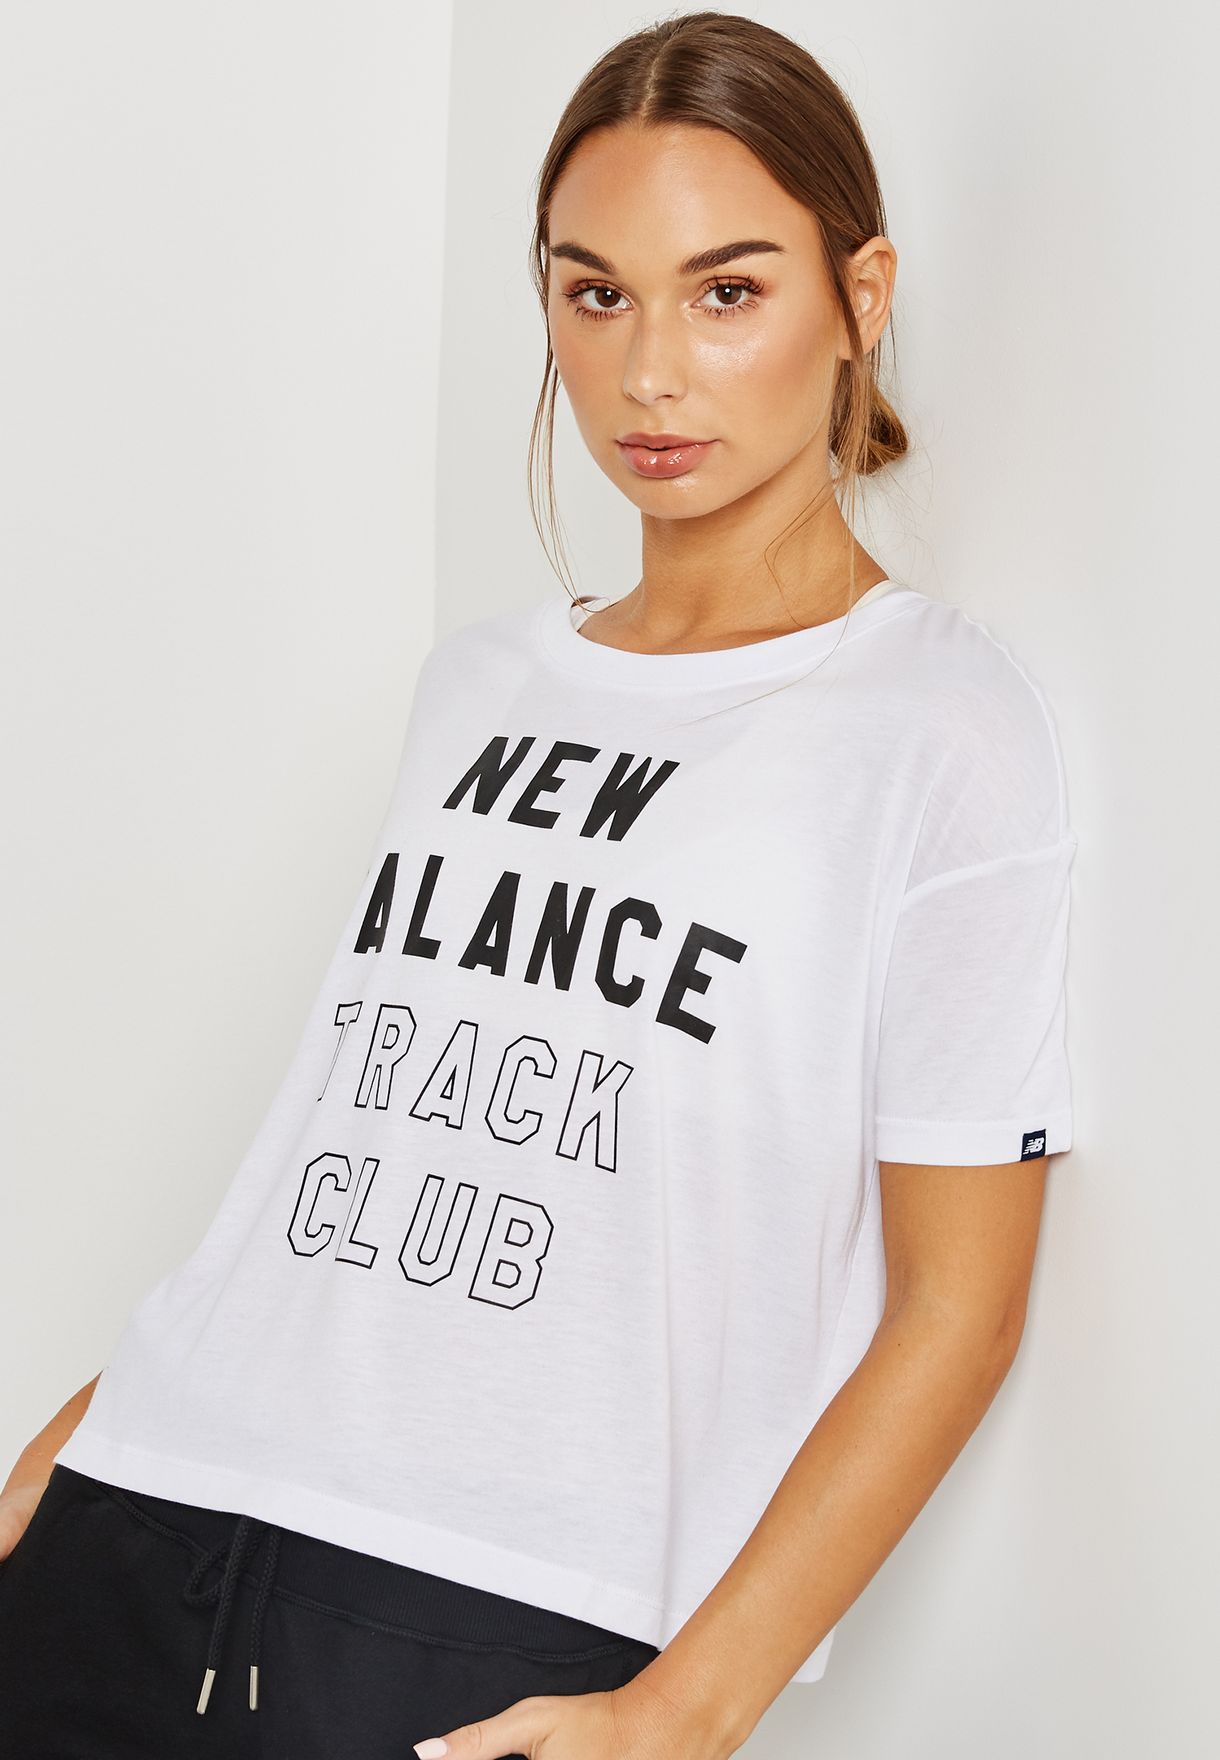 new balance track club t shirt